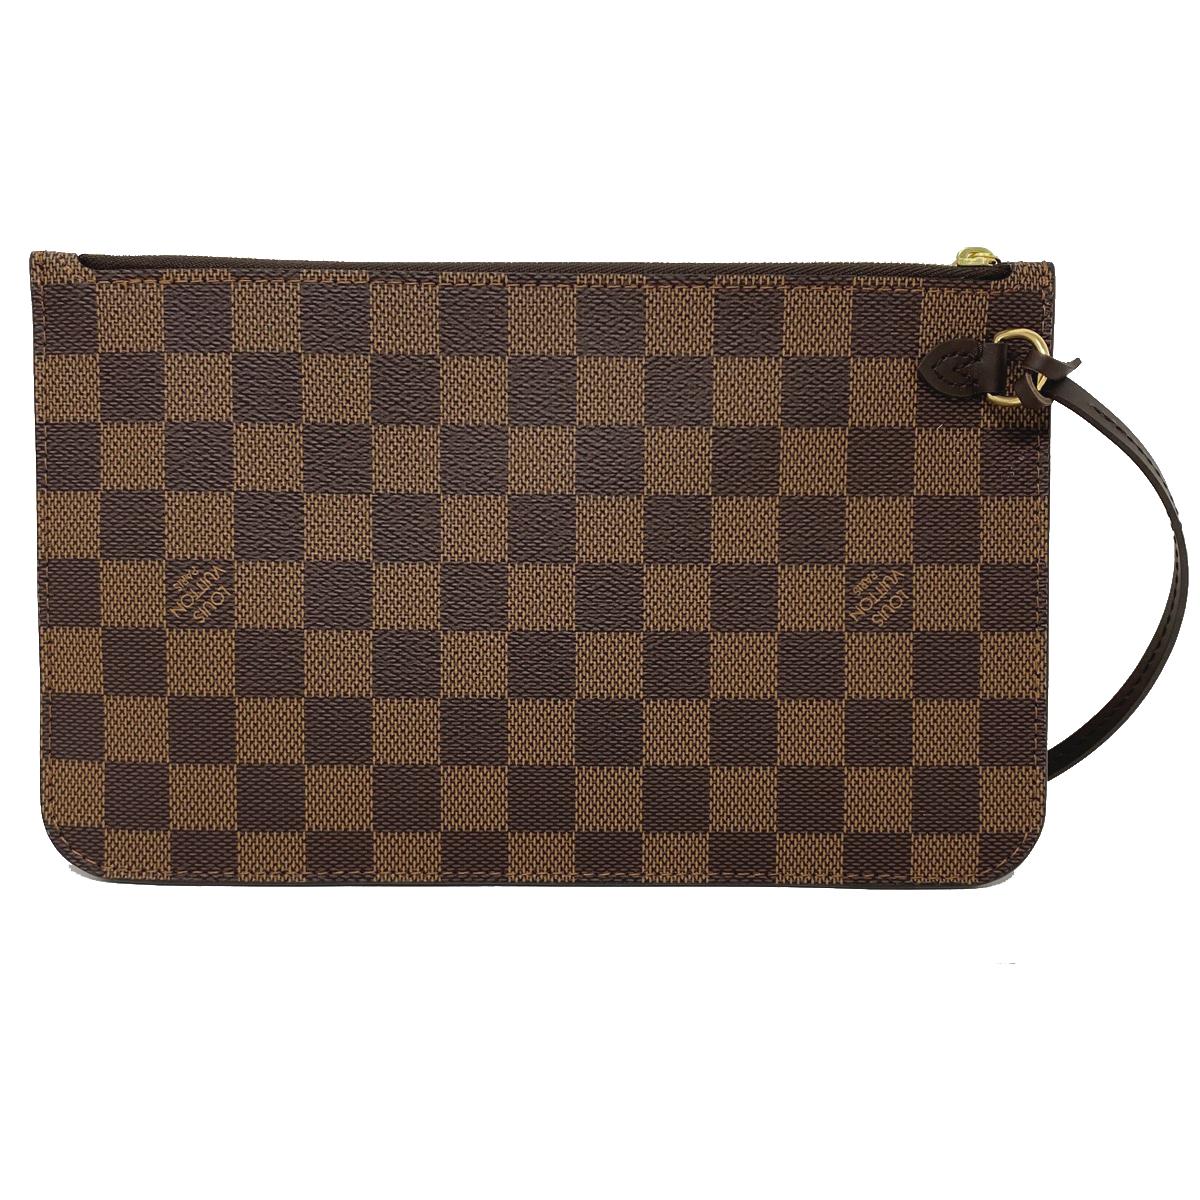 Louis Vuitton Neverfull MM Cherry Damier Ebene Leather Canvas Tote Handbag 2